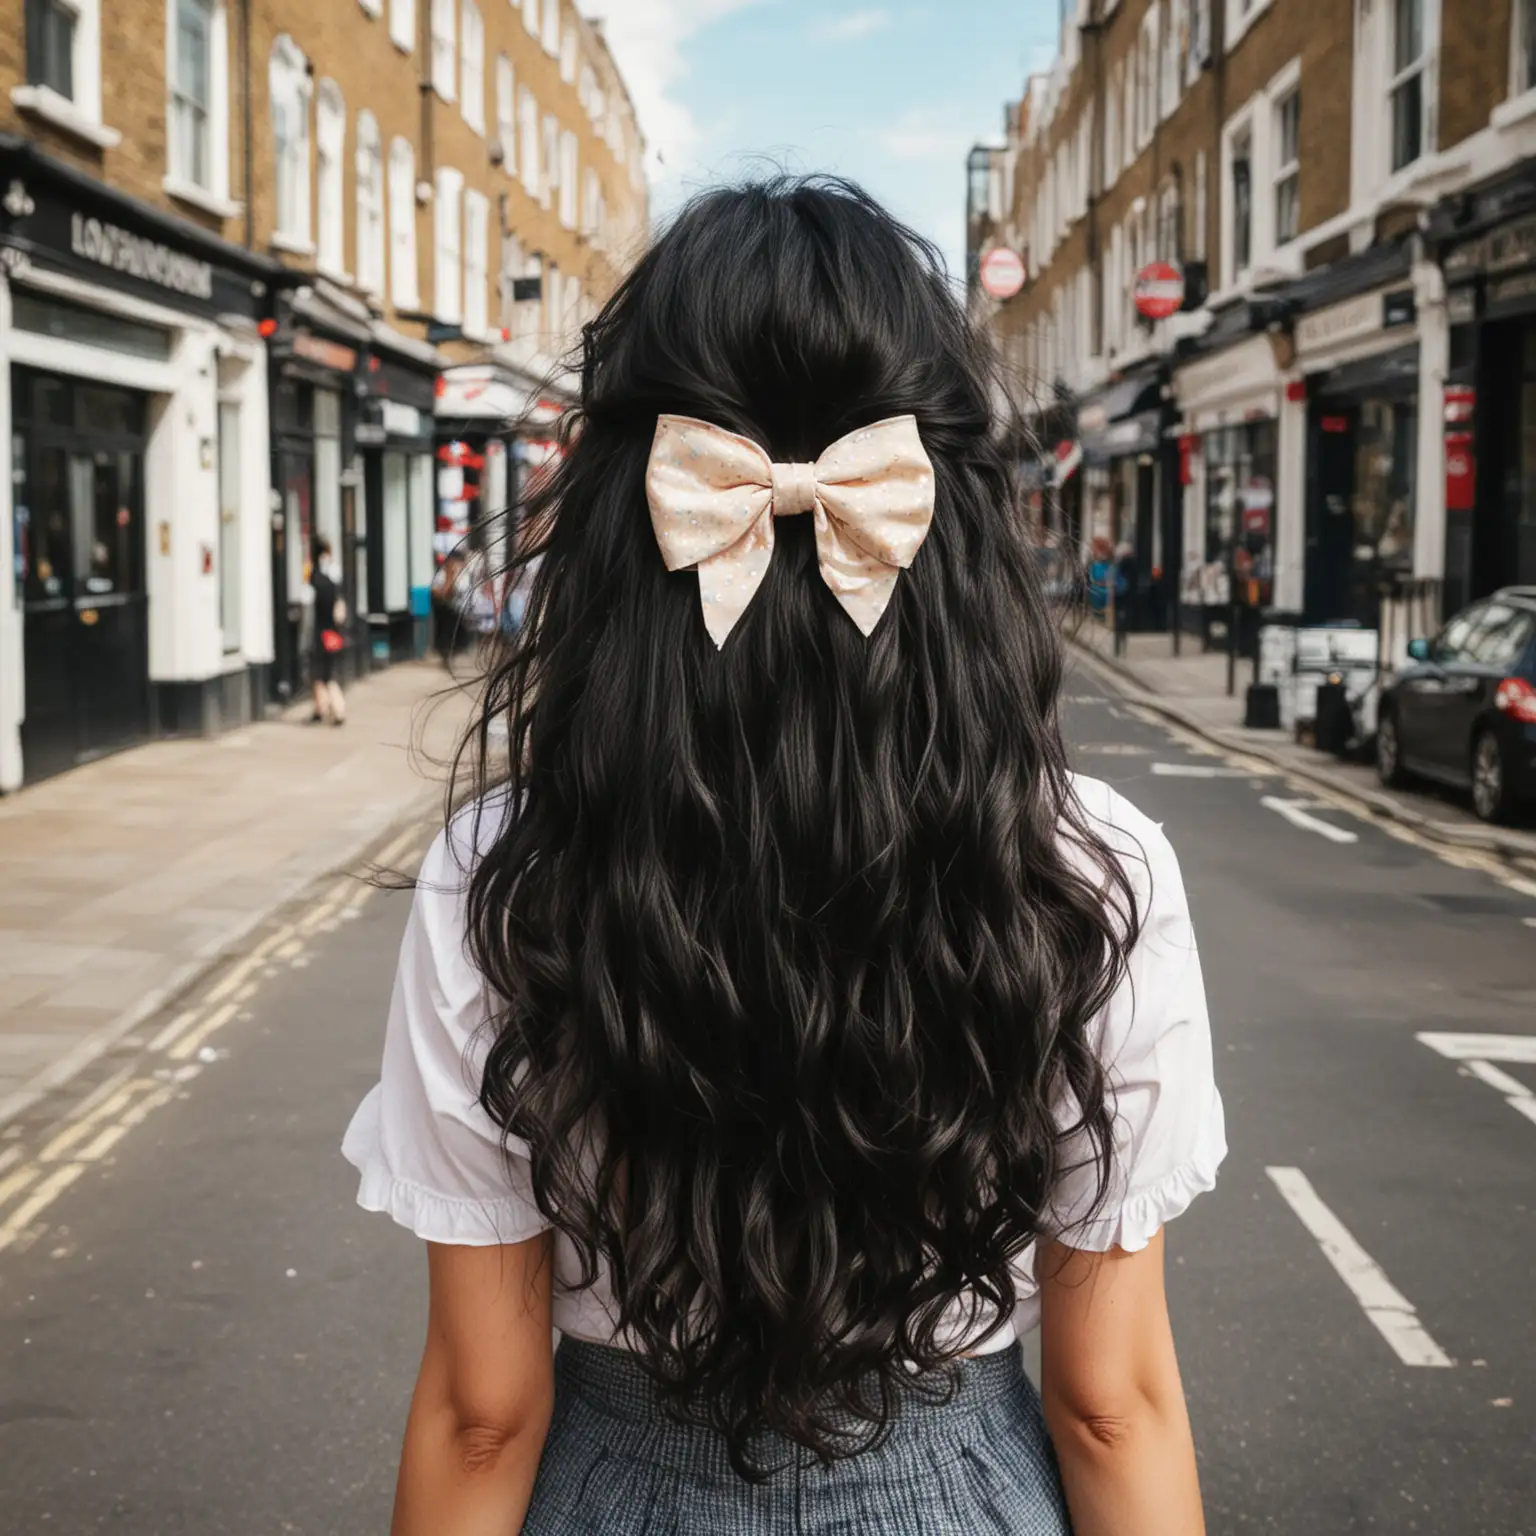 Girl with Long Wavy Black Hair Walking in London Streets